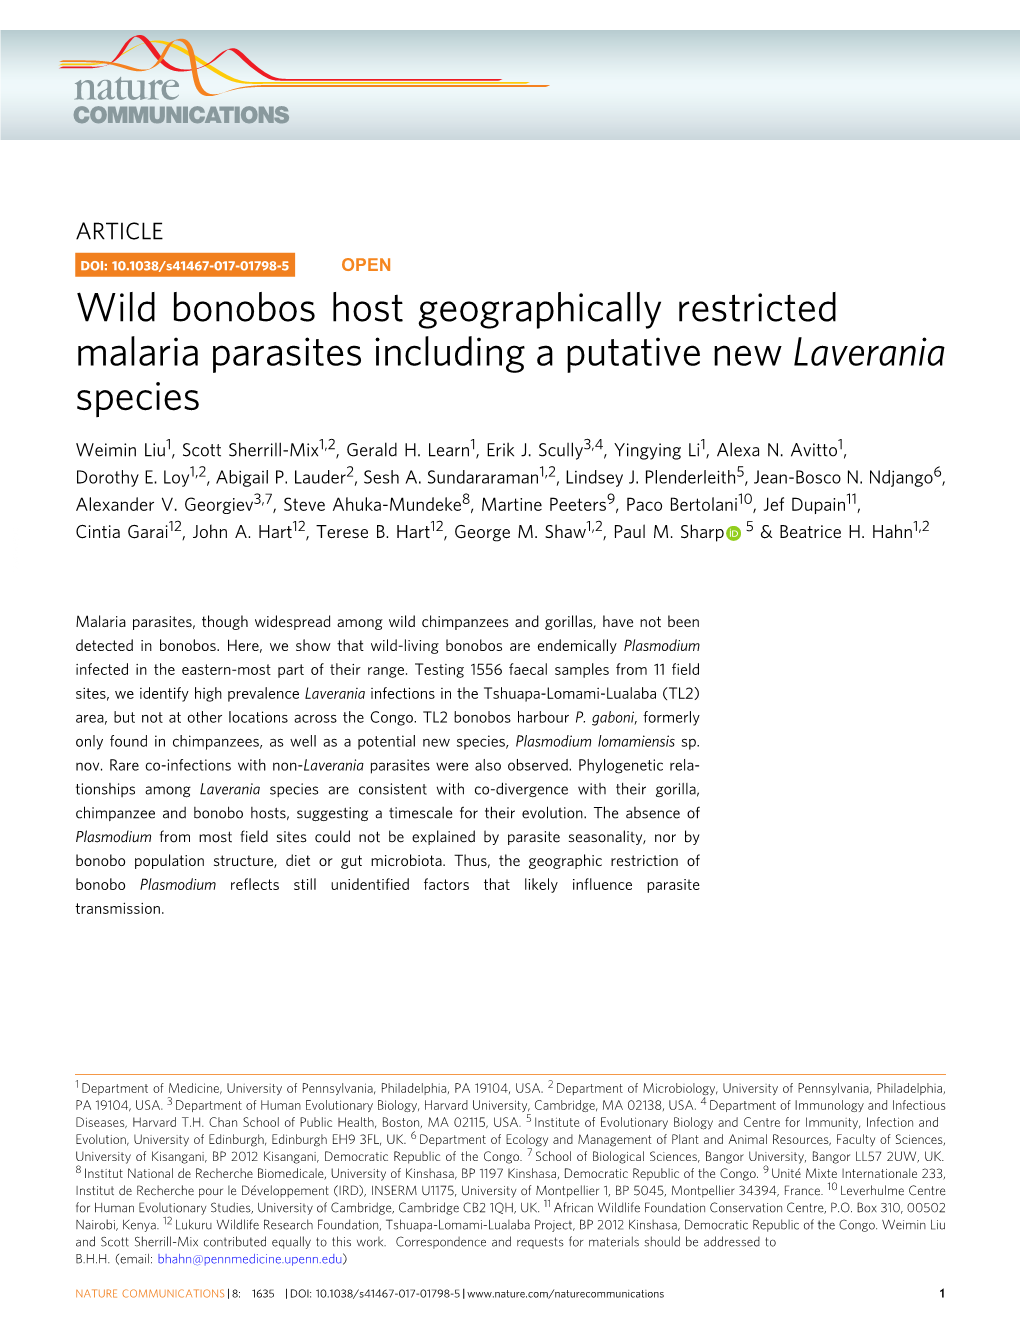 Wild Bonobos Host Geographically Restricted Malaria Parasites Including a Putative New Laverania Species